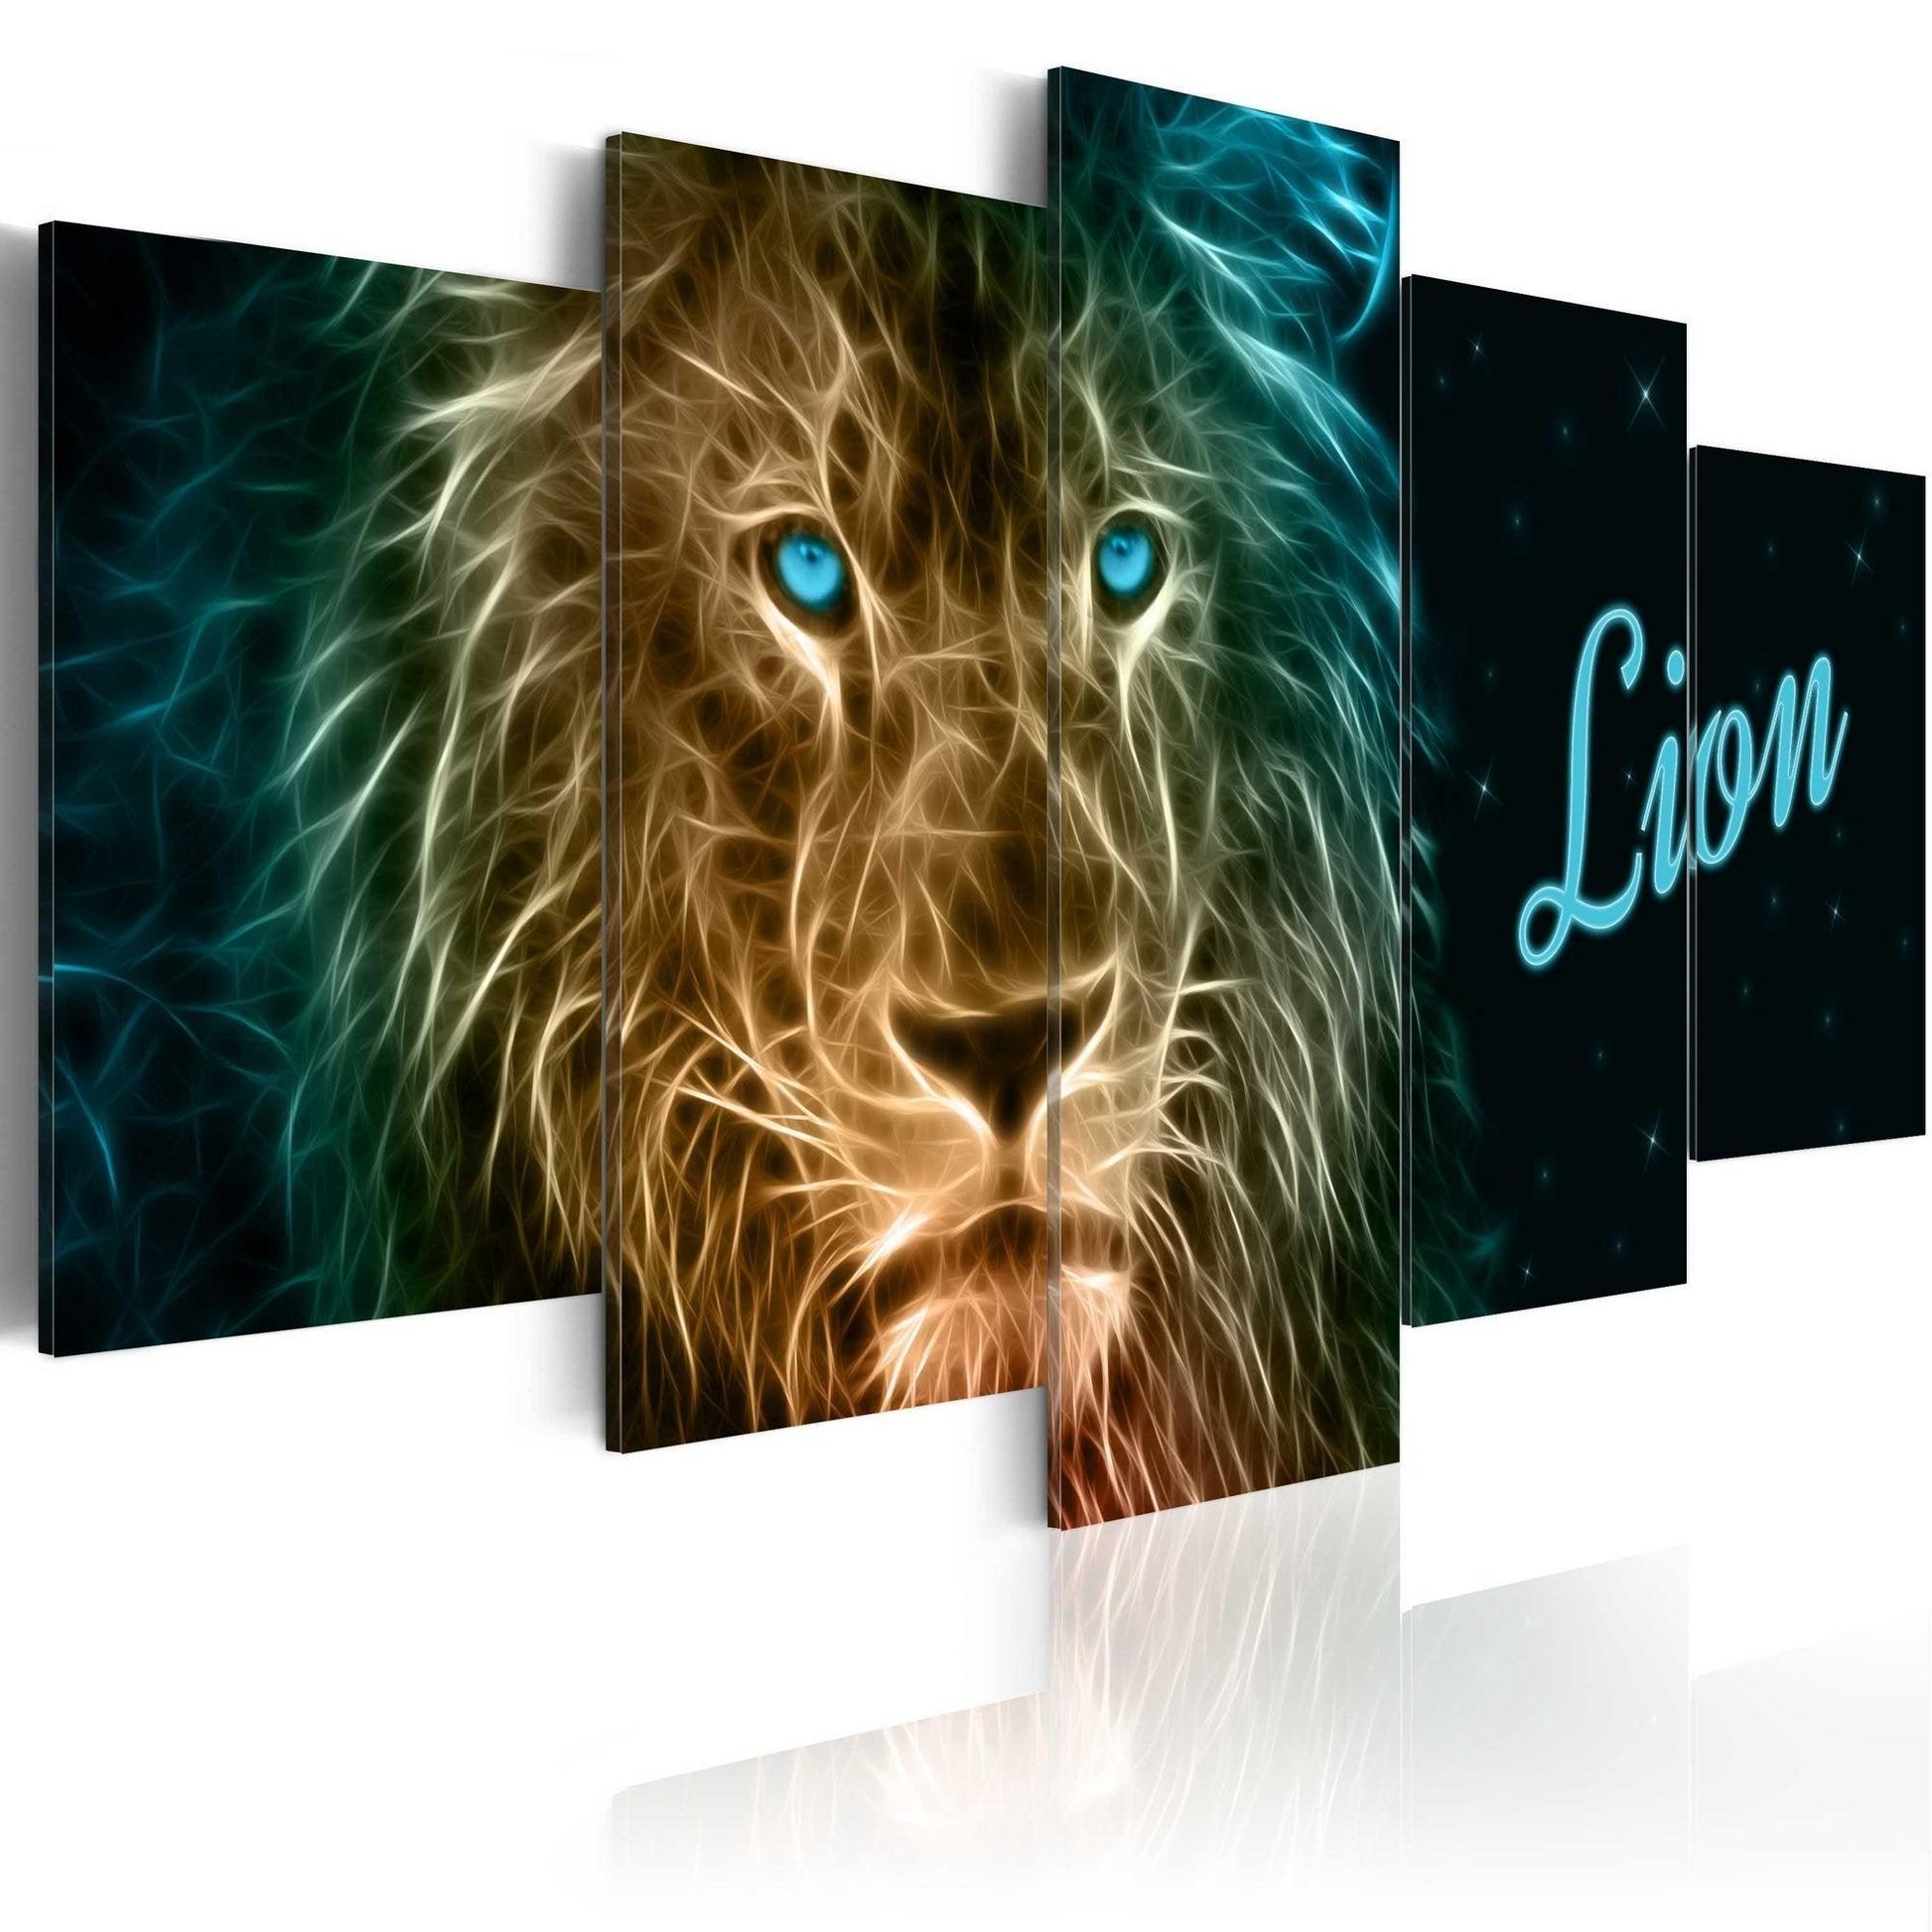 Canvas Print - Gold lion - www.trendingbestsellers.com